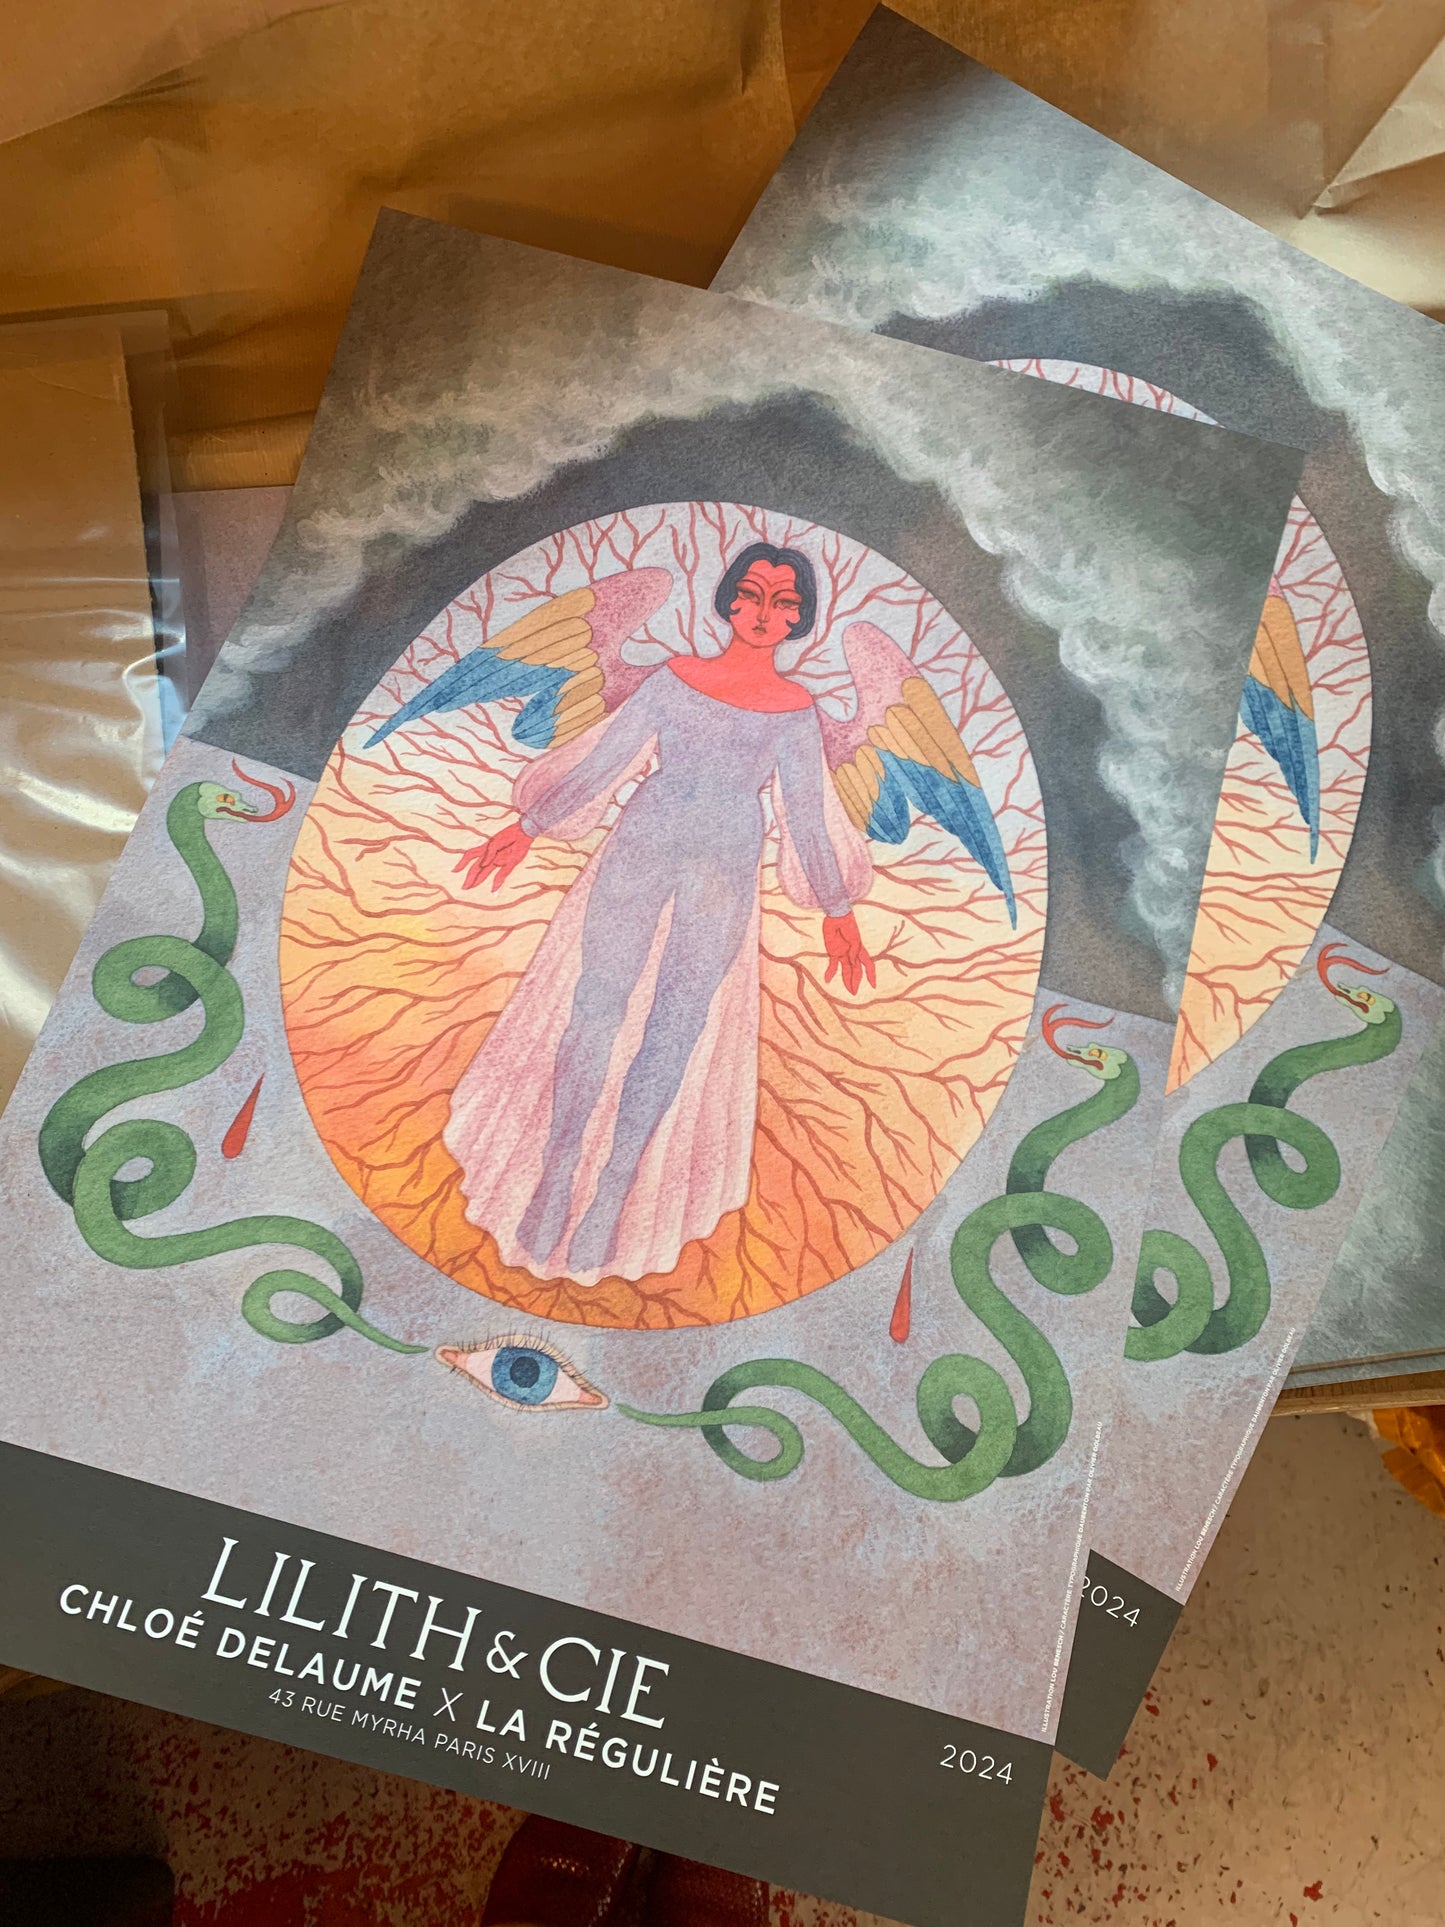 Poster Lilith & cie par Lou Benesch